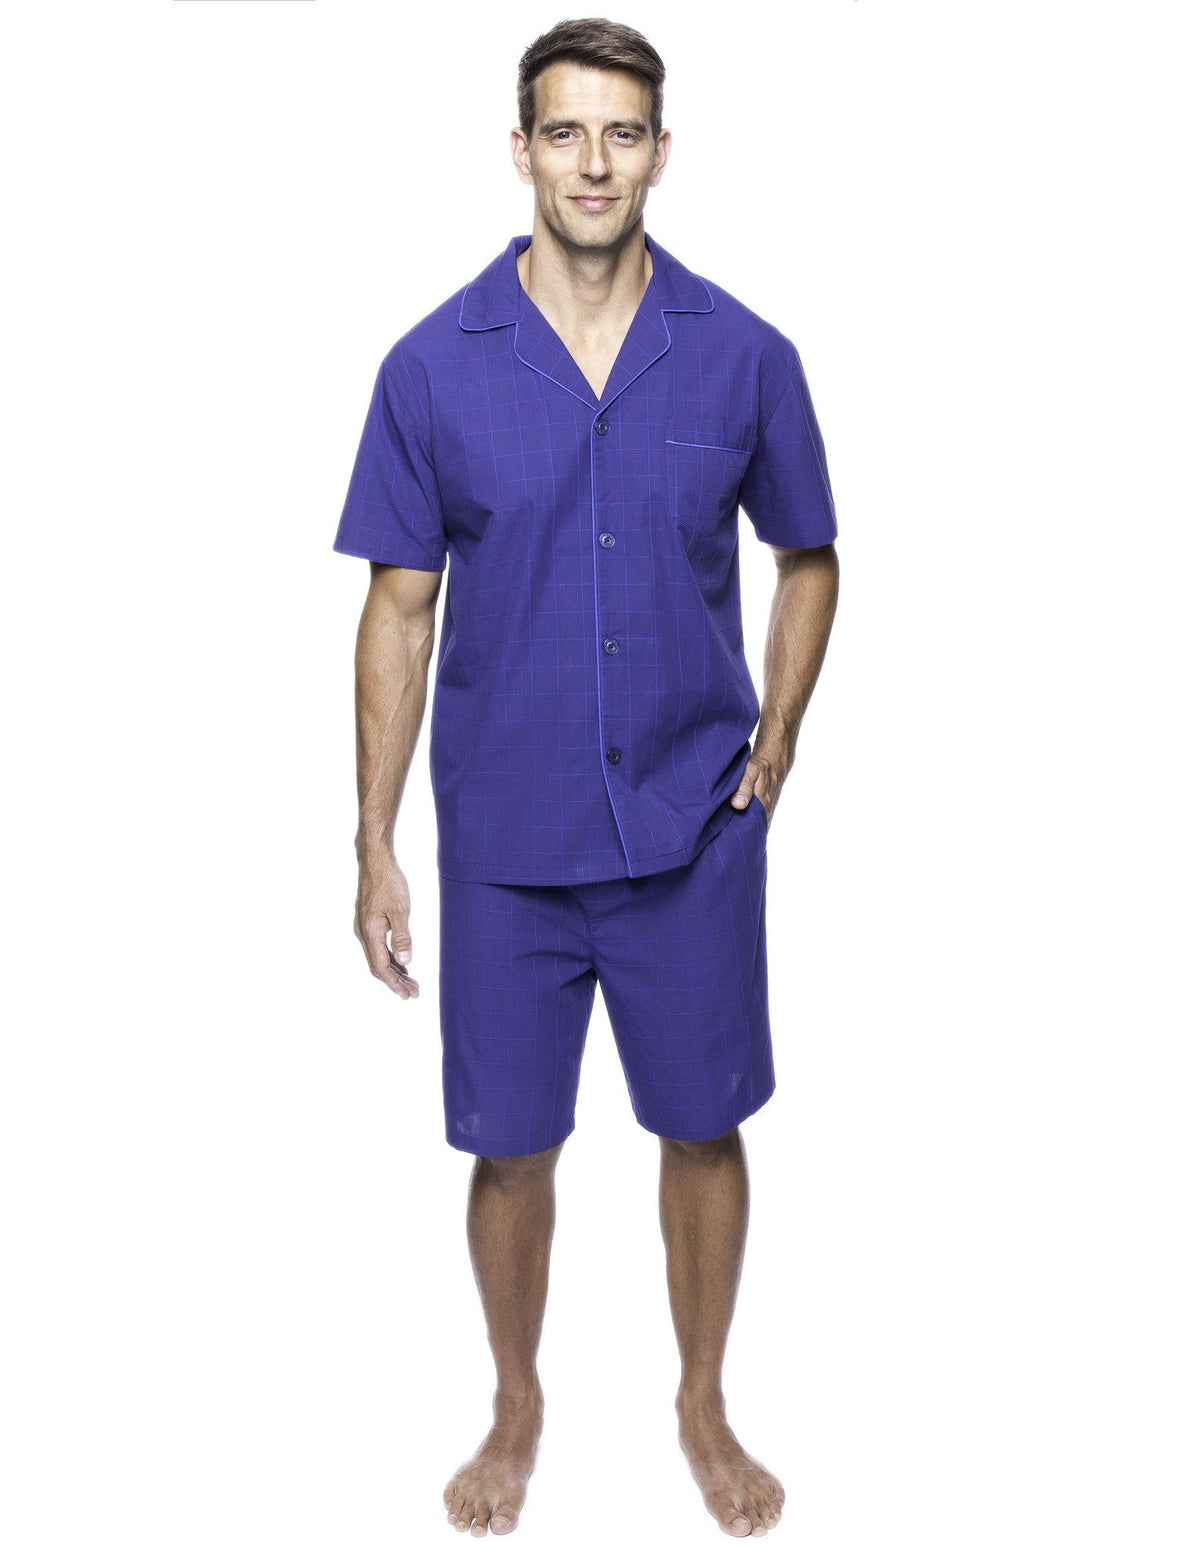 Men's 100% Woven Cotton Short Pajama Sleepwear Set - Windowpane Checks Blue